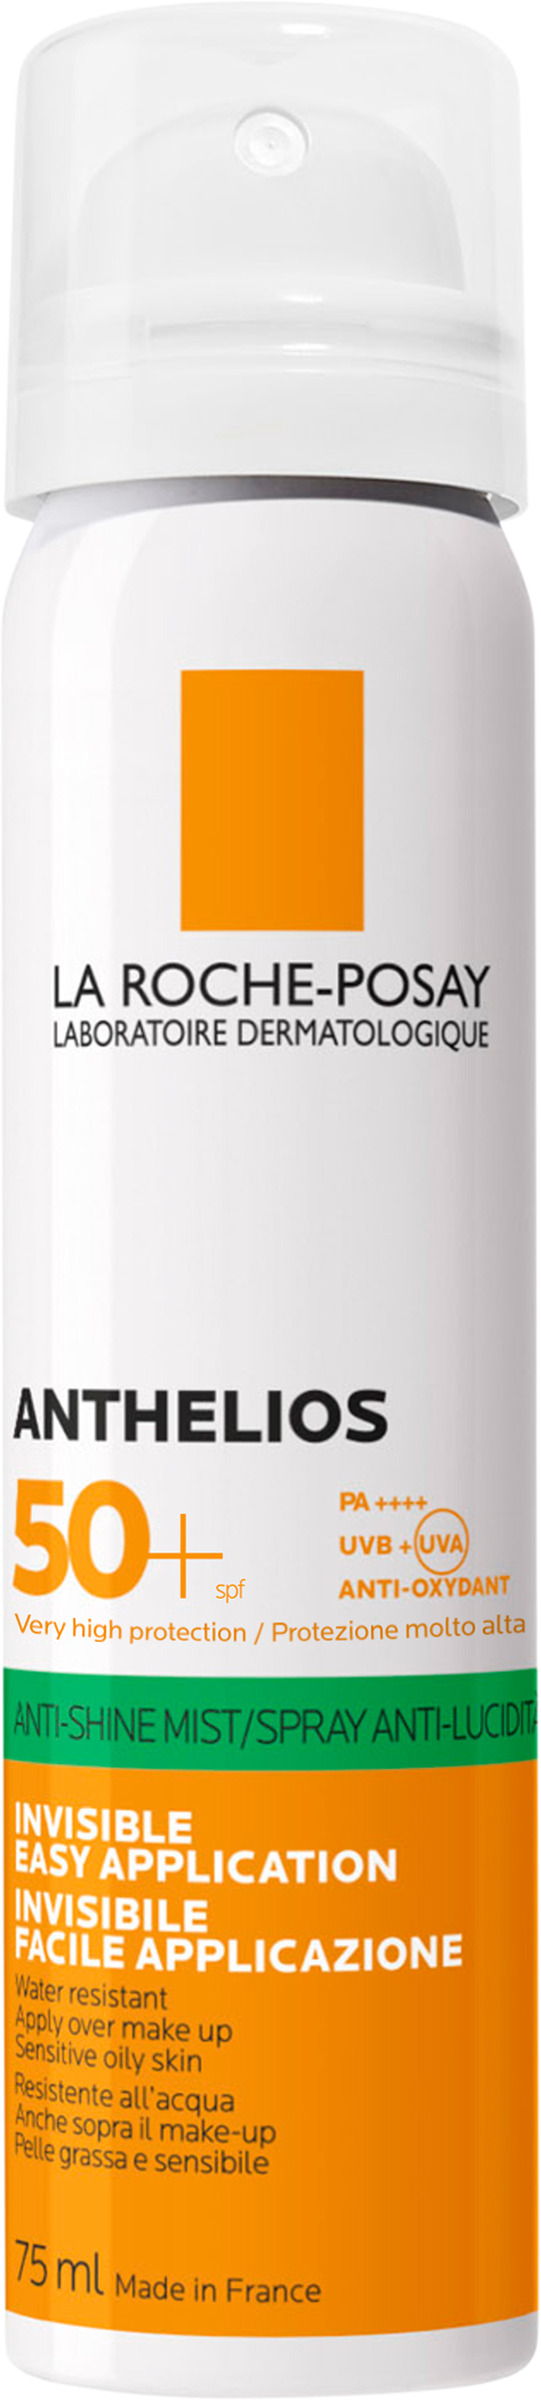 La Roche-Posay Anthelios Anti Shine Mist SPF50+ 75ml